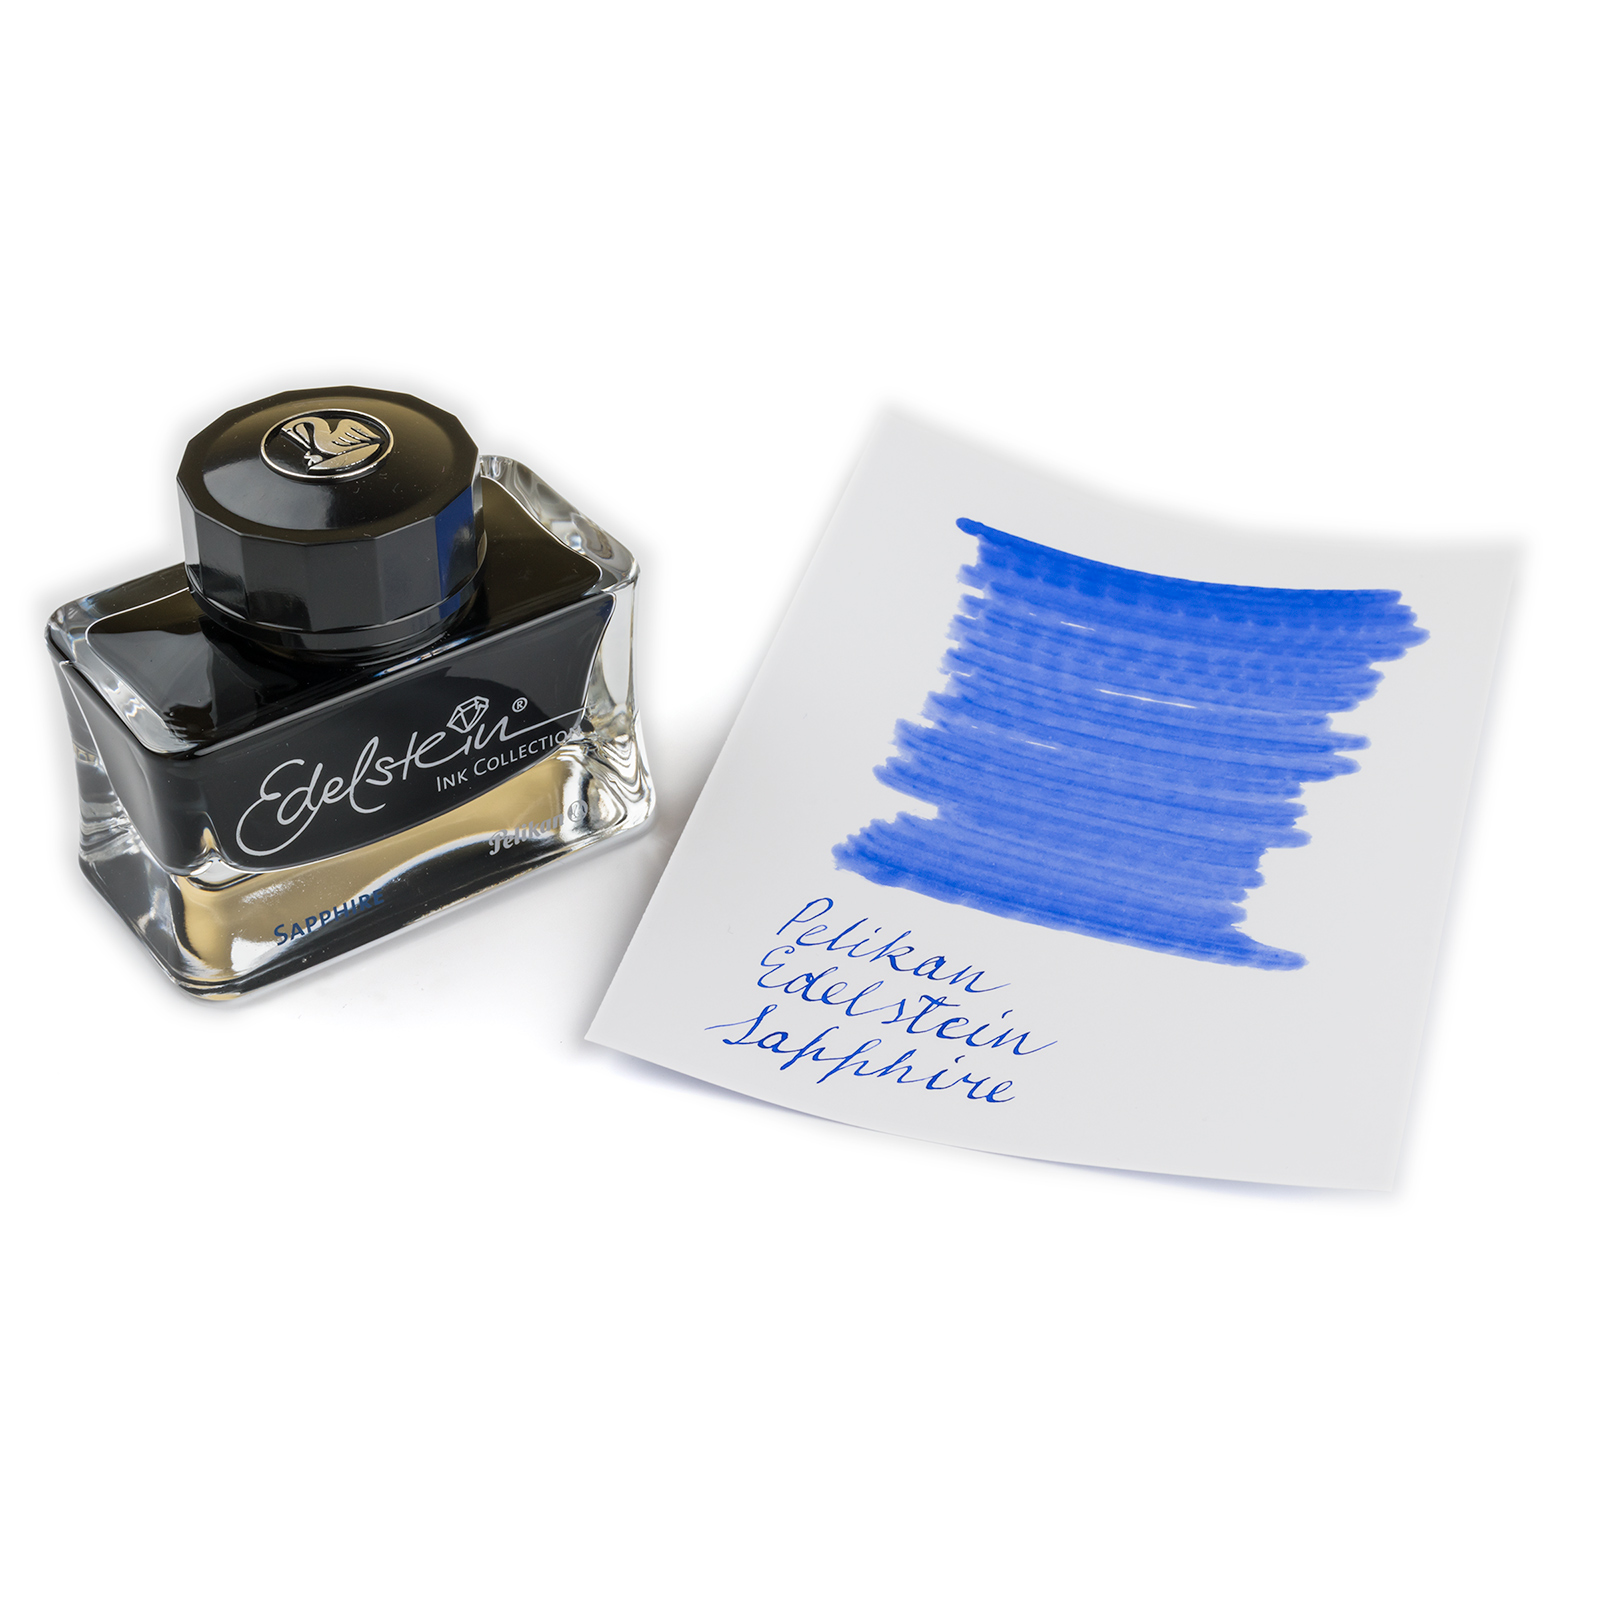 Pelikan 4001 Turquoise 62.5ml bottle – Scribe Market